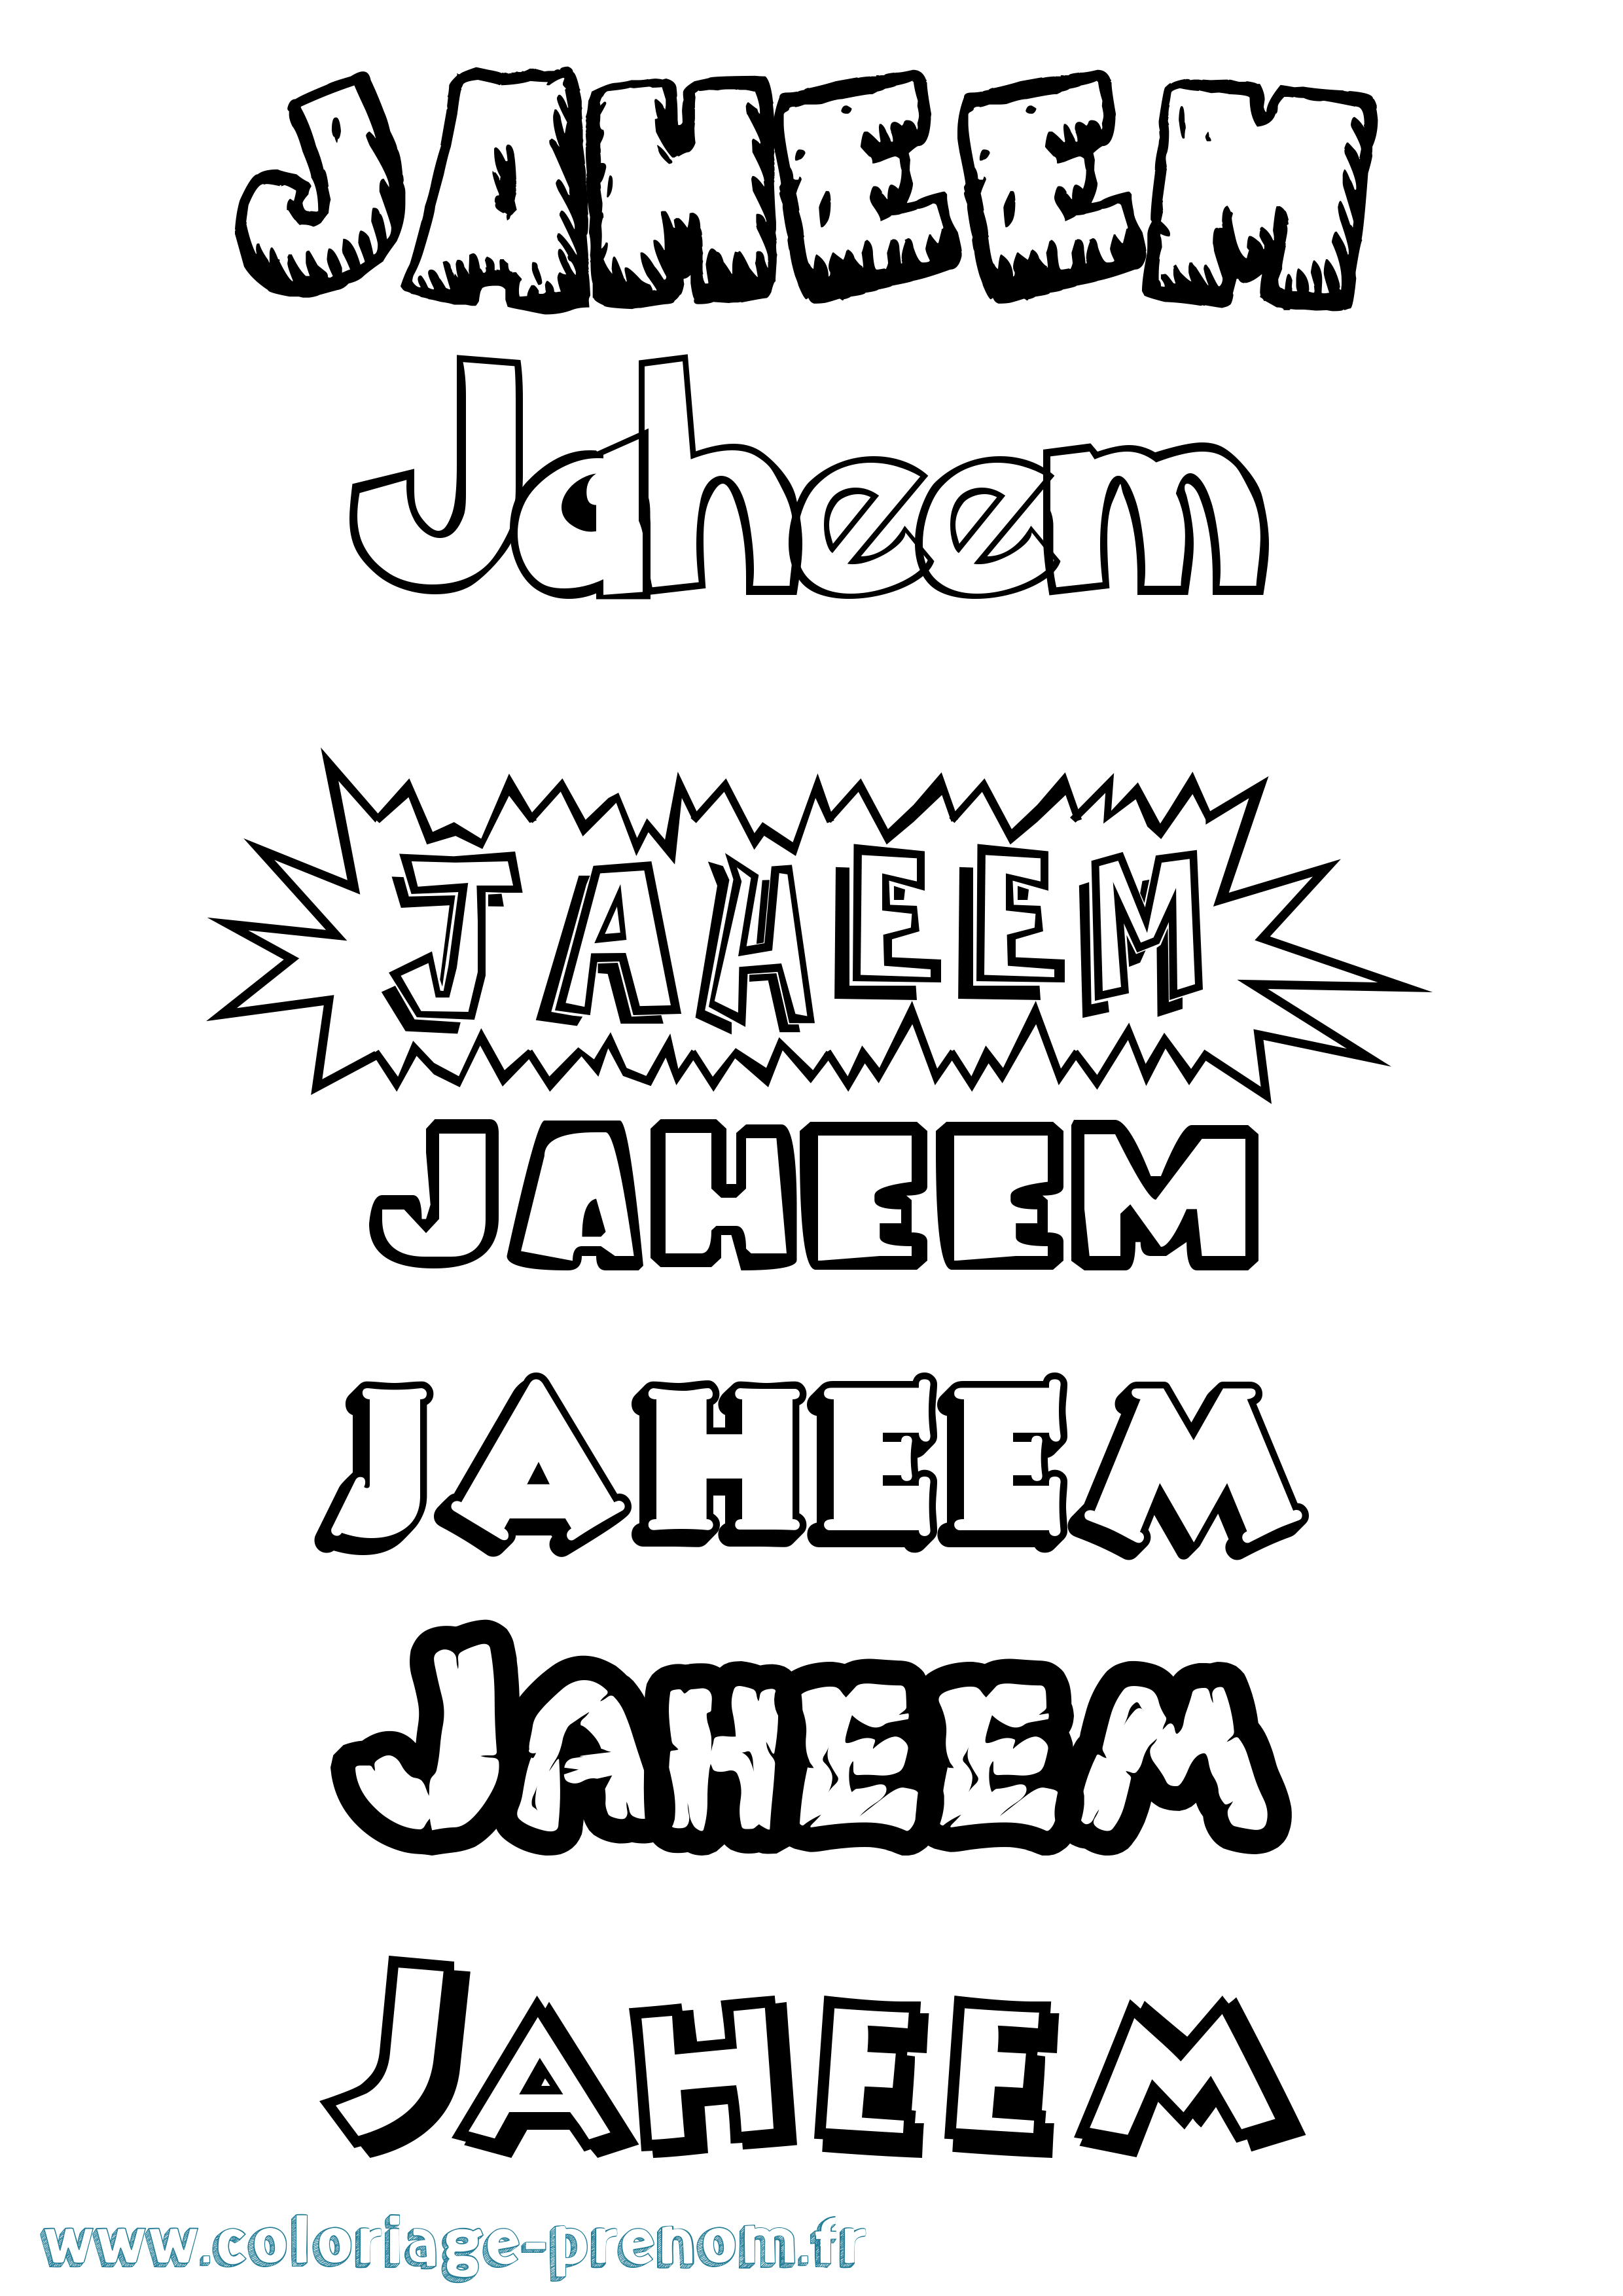 Coloriage prénom Jaheem Dessin Animé